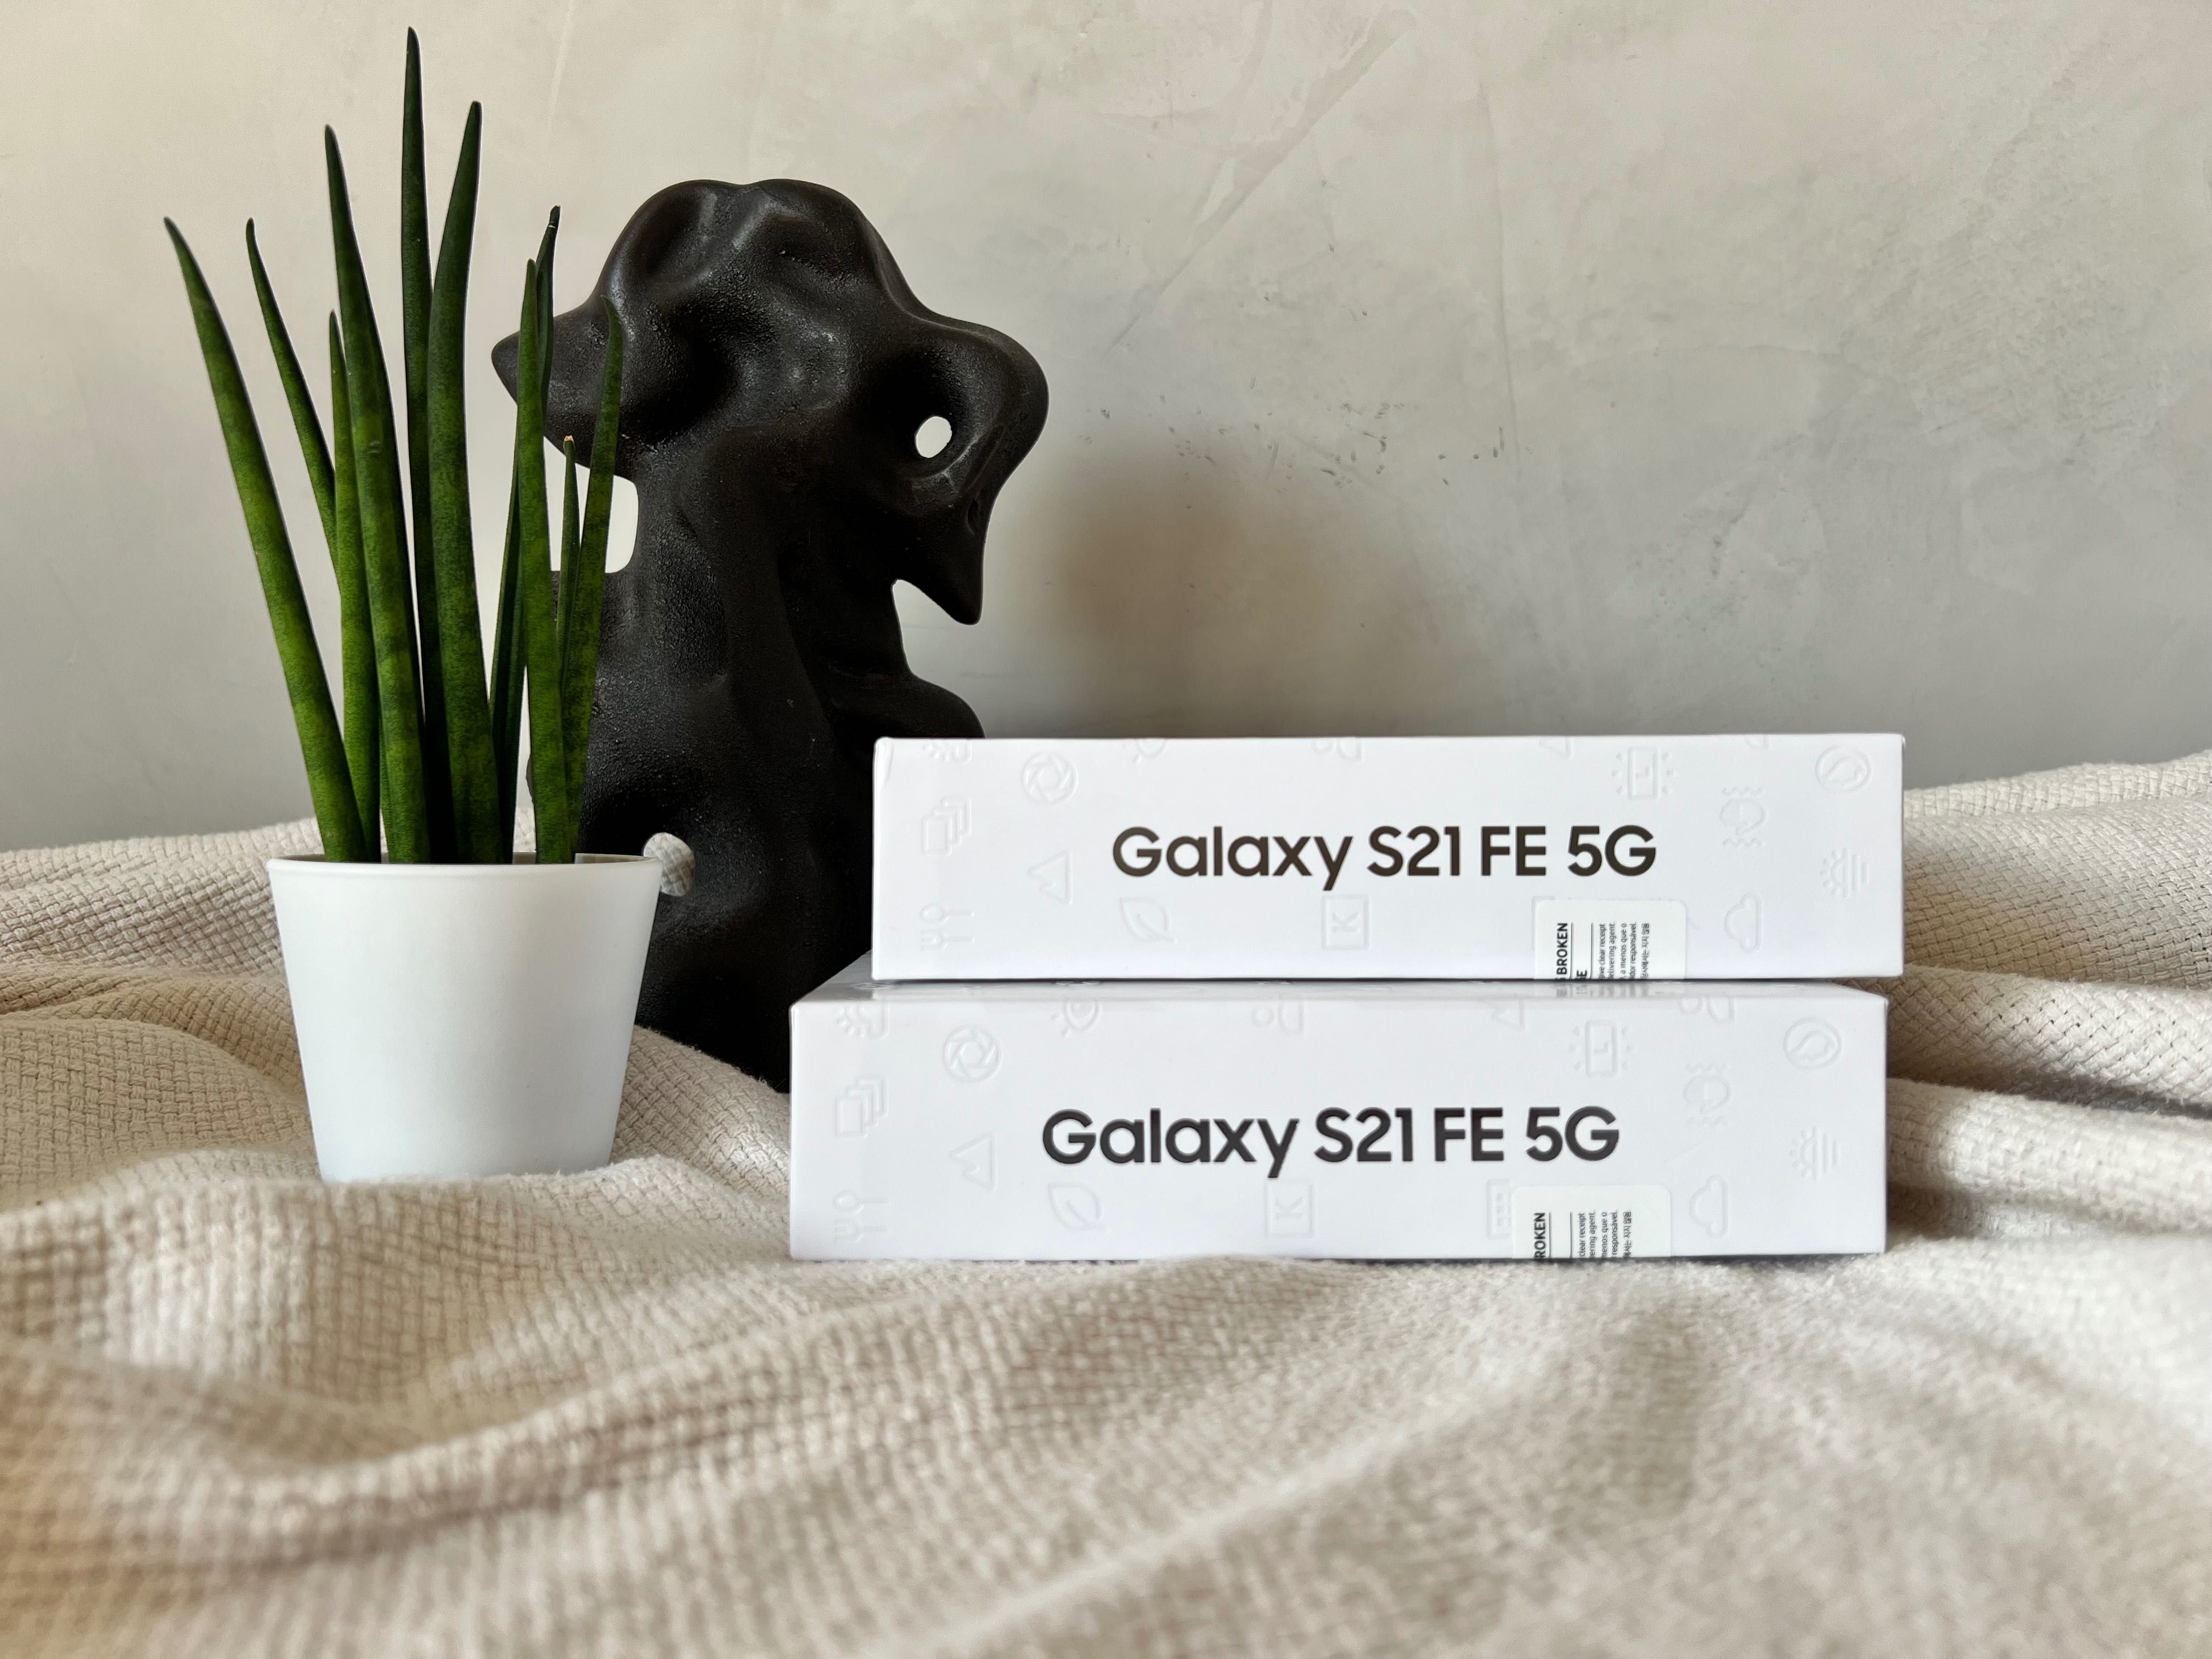 []]Samsung Galaxy S21 FE 5G 128GB - Graphite, Olive - NIE NA RATY []]